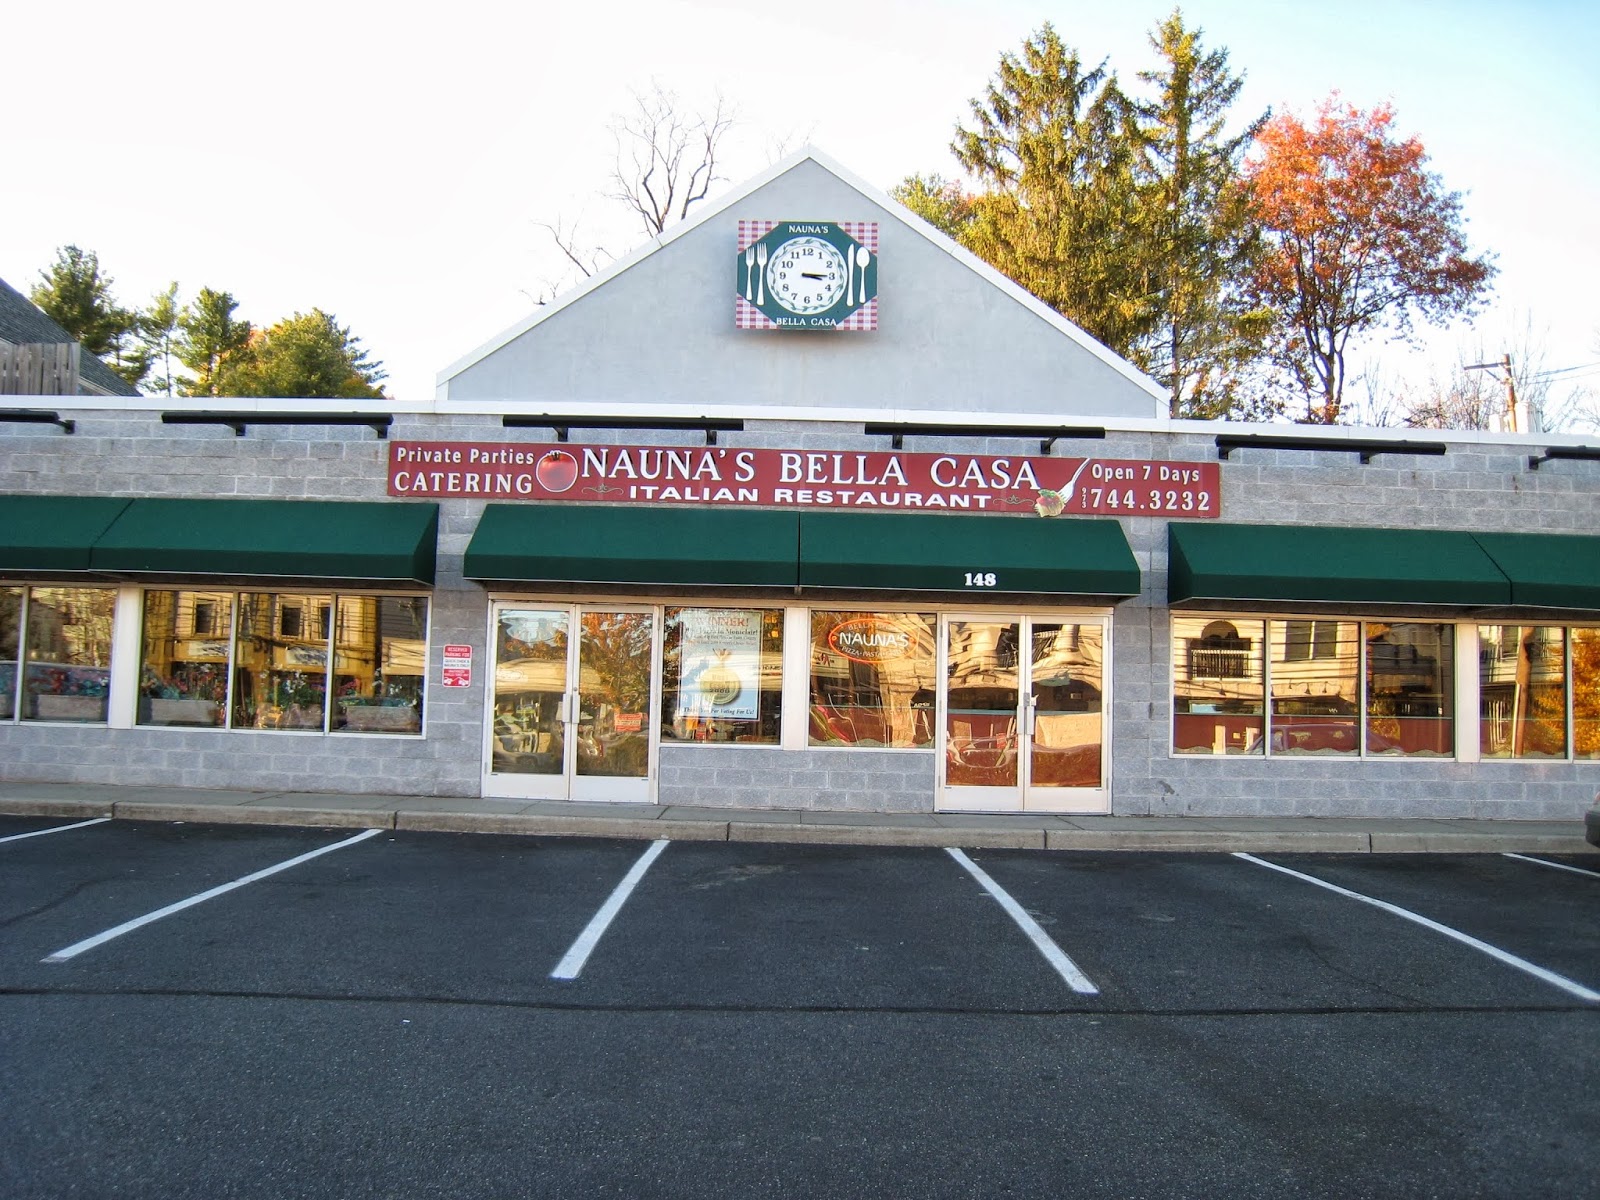 Photo of Nauna's Bella Casa Ristorante in Montclair City, New Jersey, United States - 3 Picture of Restaurant, Food, Point of interest, Establishment, Store